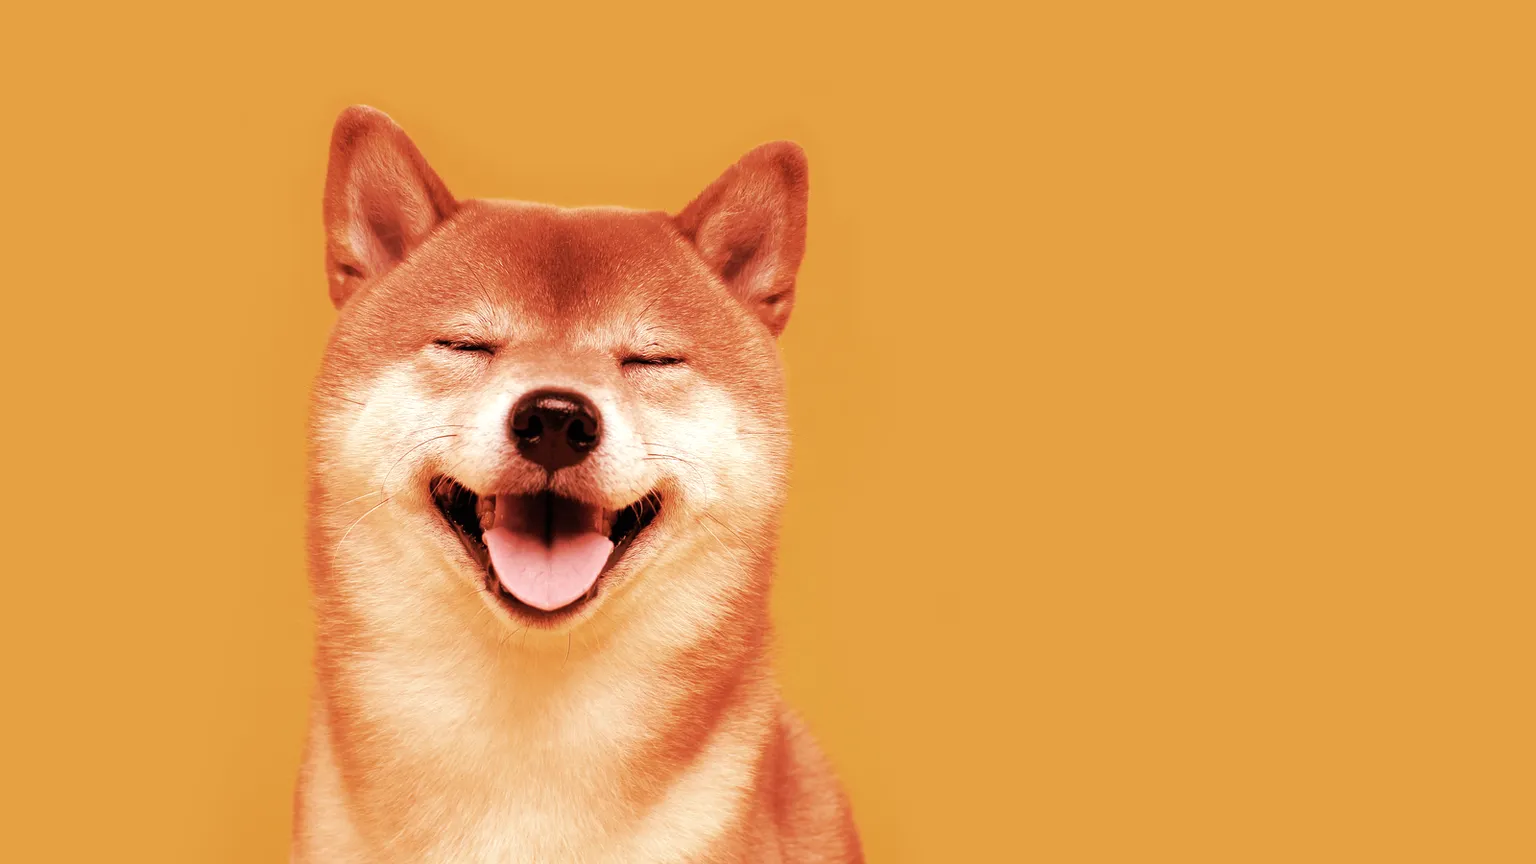 Happy Shiba Inu dog. Image: Shutterstock